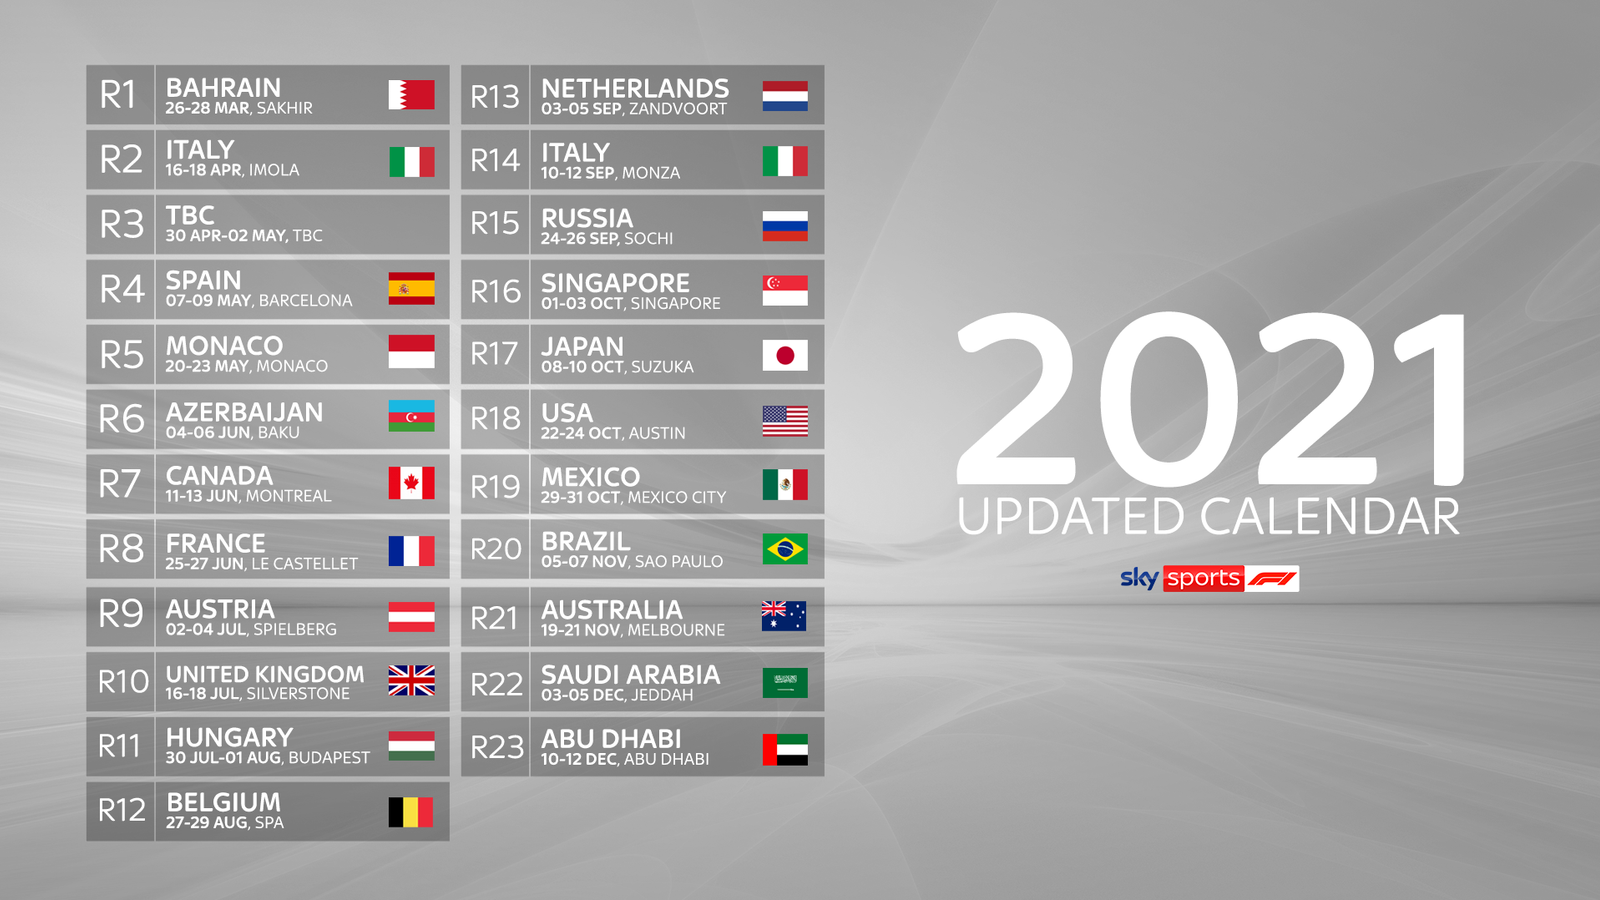 Formule 1 Agenda 2021 Formula 1 In 2021 Revised Calendar For Record 23 Race Season Revealed F1 News